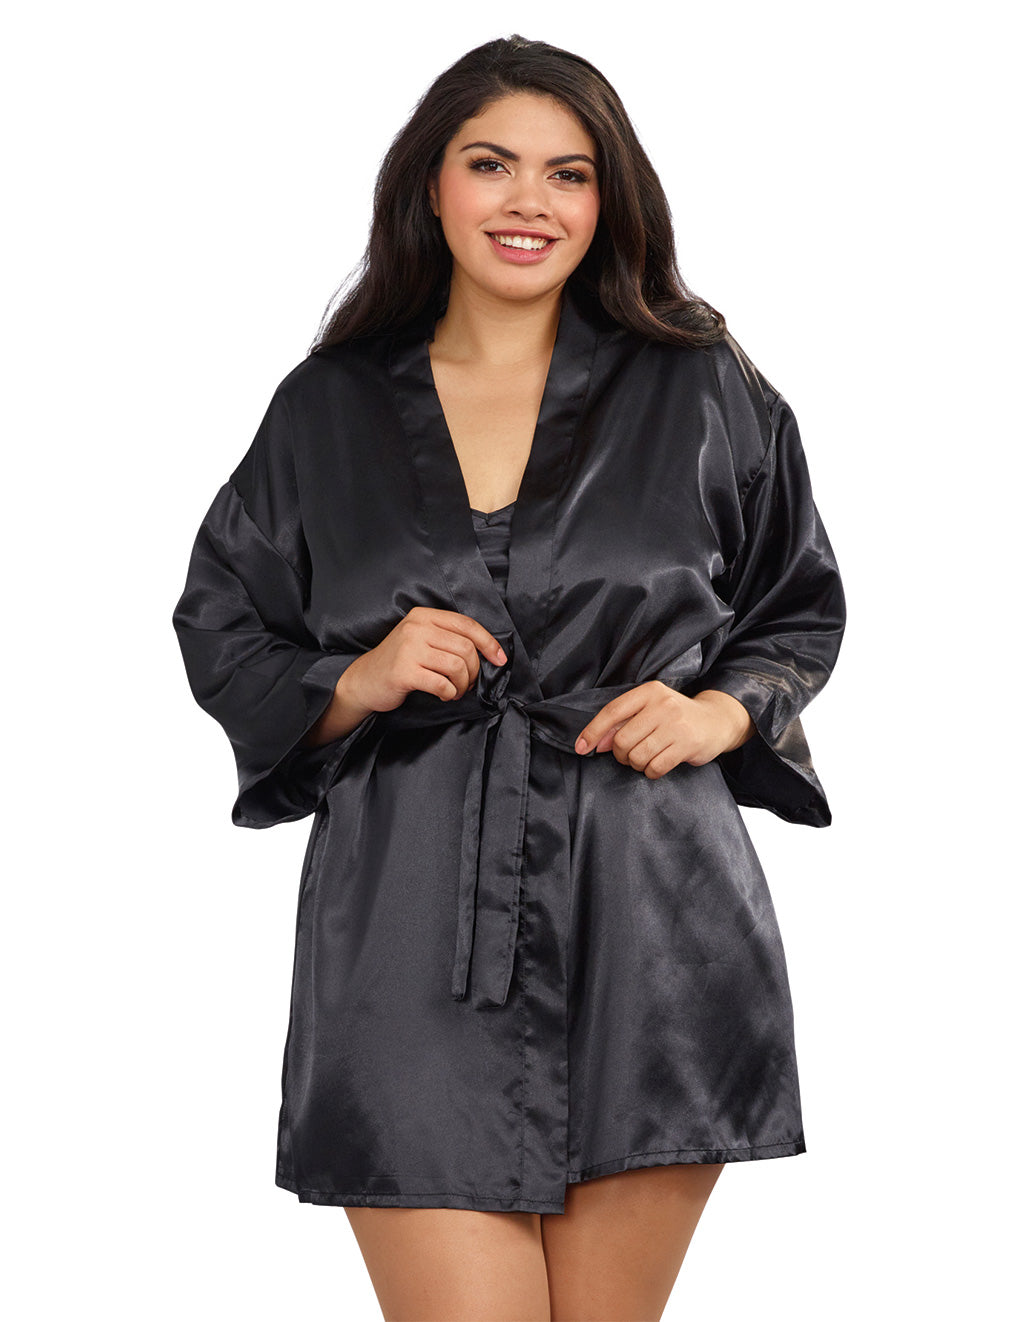 Satin Charm Robe and Chemise Set- Black- Plus size- Front